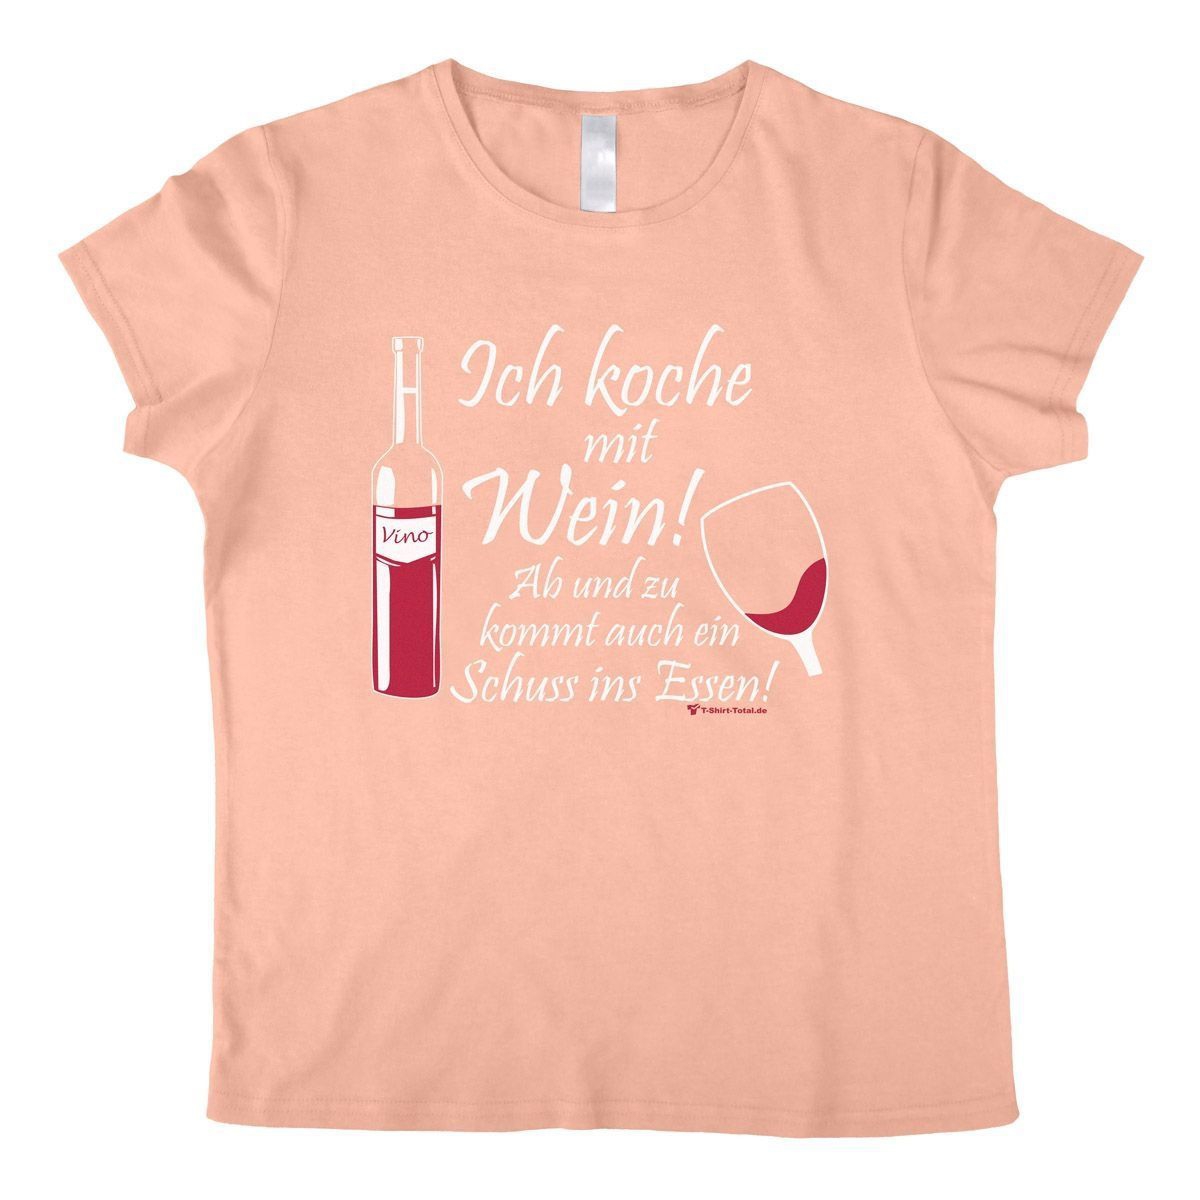 Koche mit Wein Woman T-Shirt rosa Large